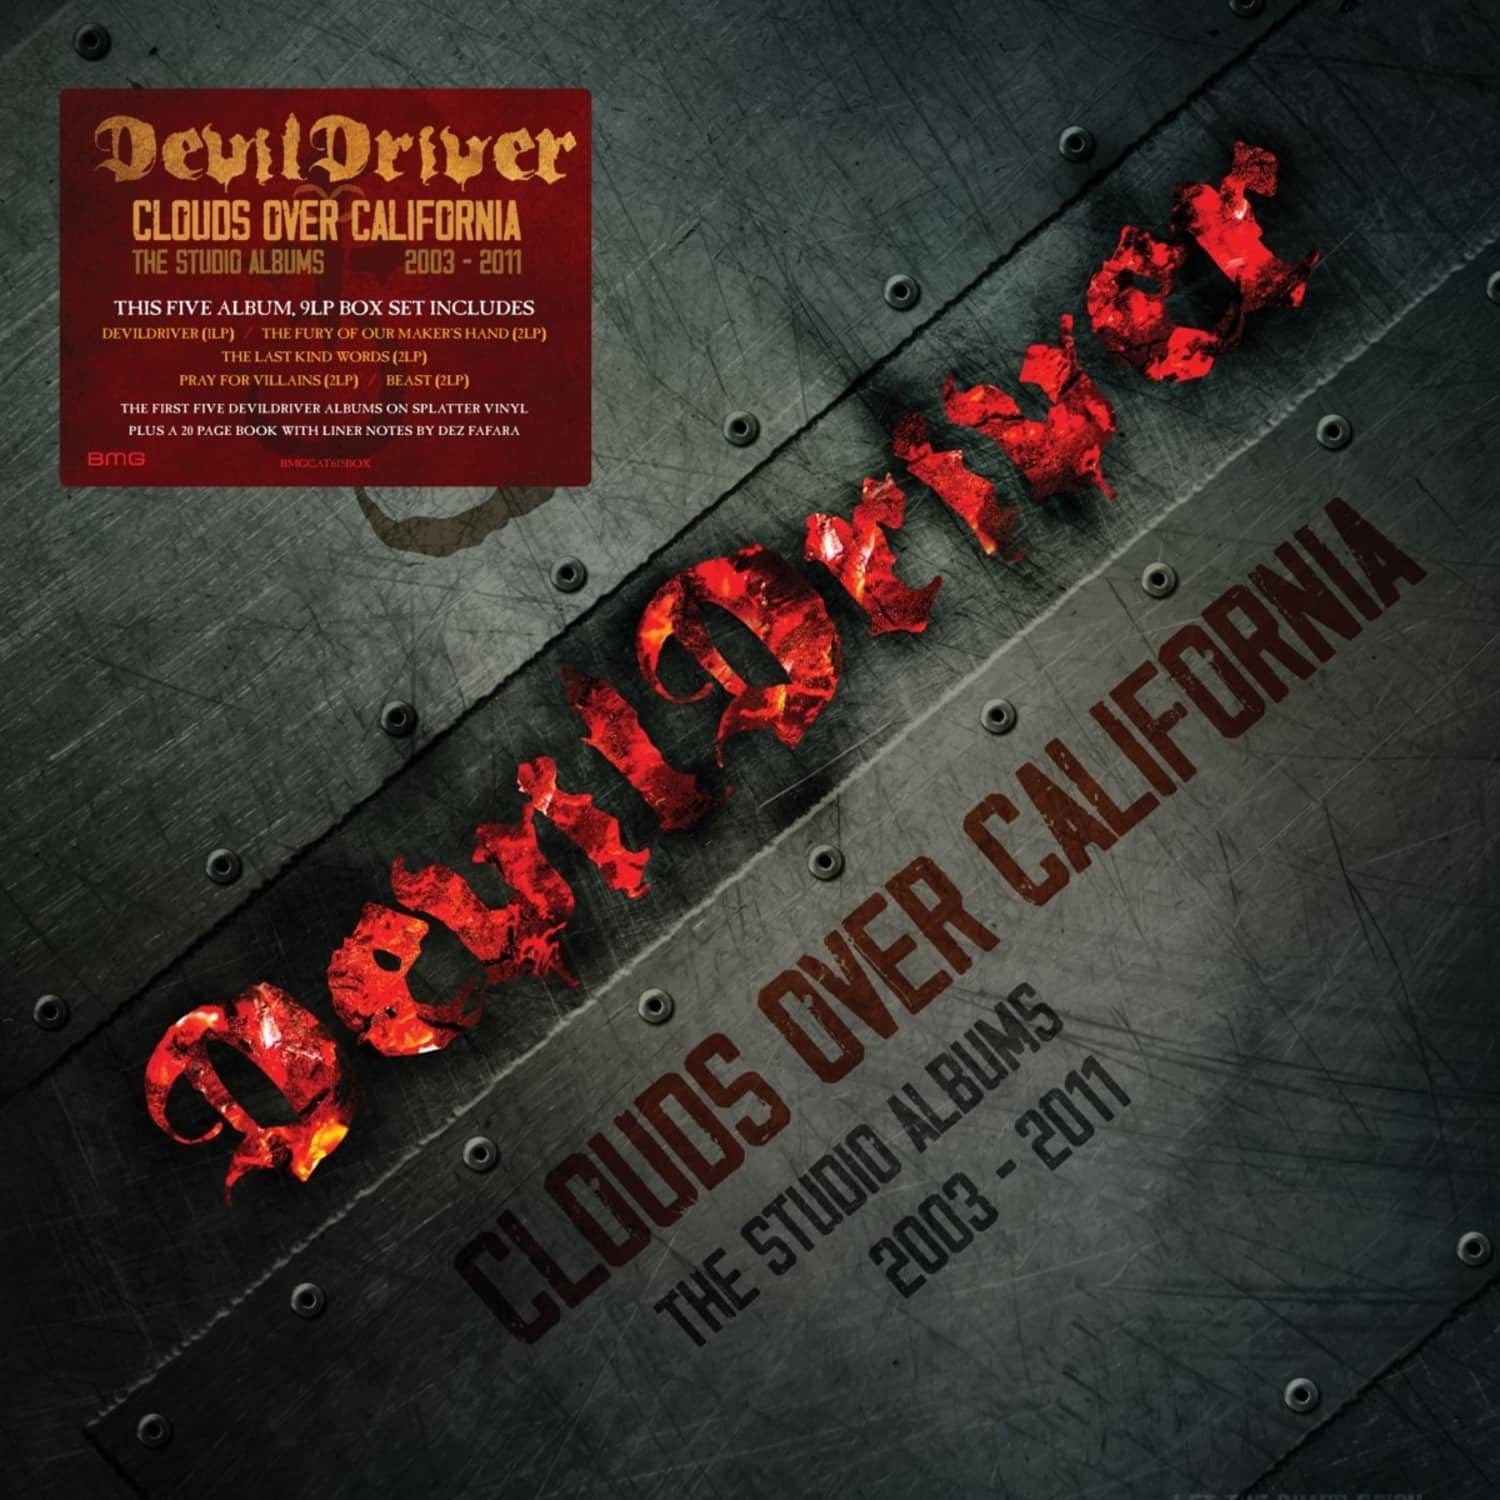 DevilDriver - CLOUDS OVER CALIFORNIA:THE STUDIO ALBUMS2003-2011 